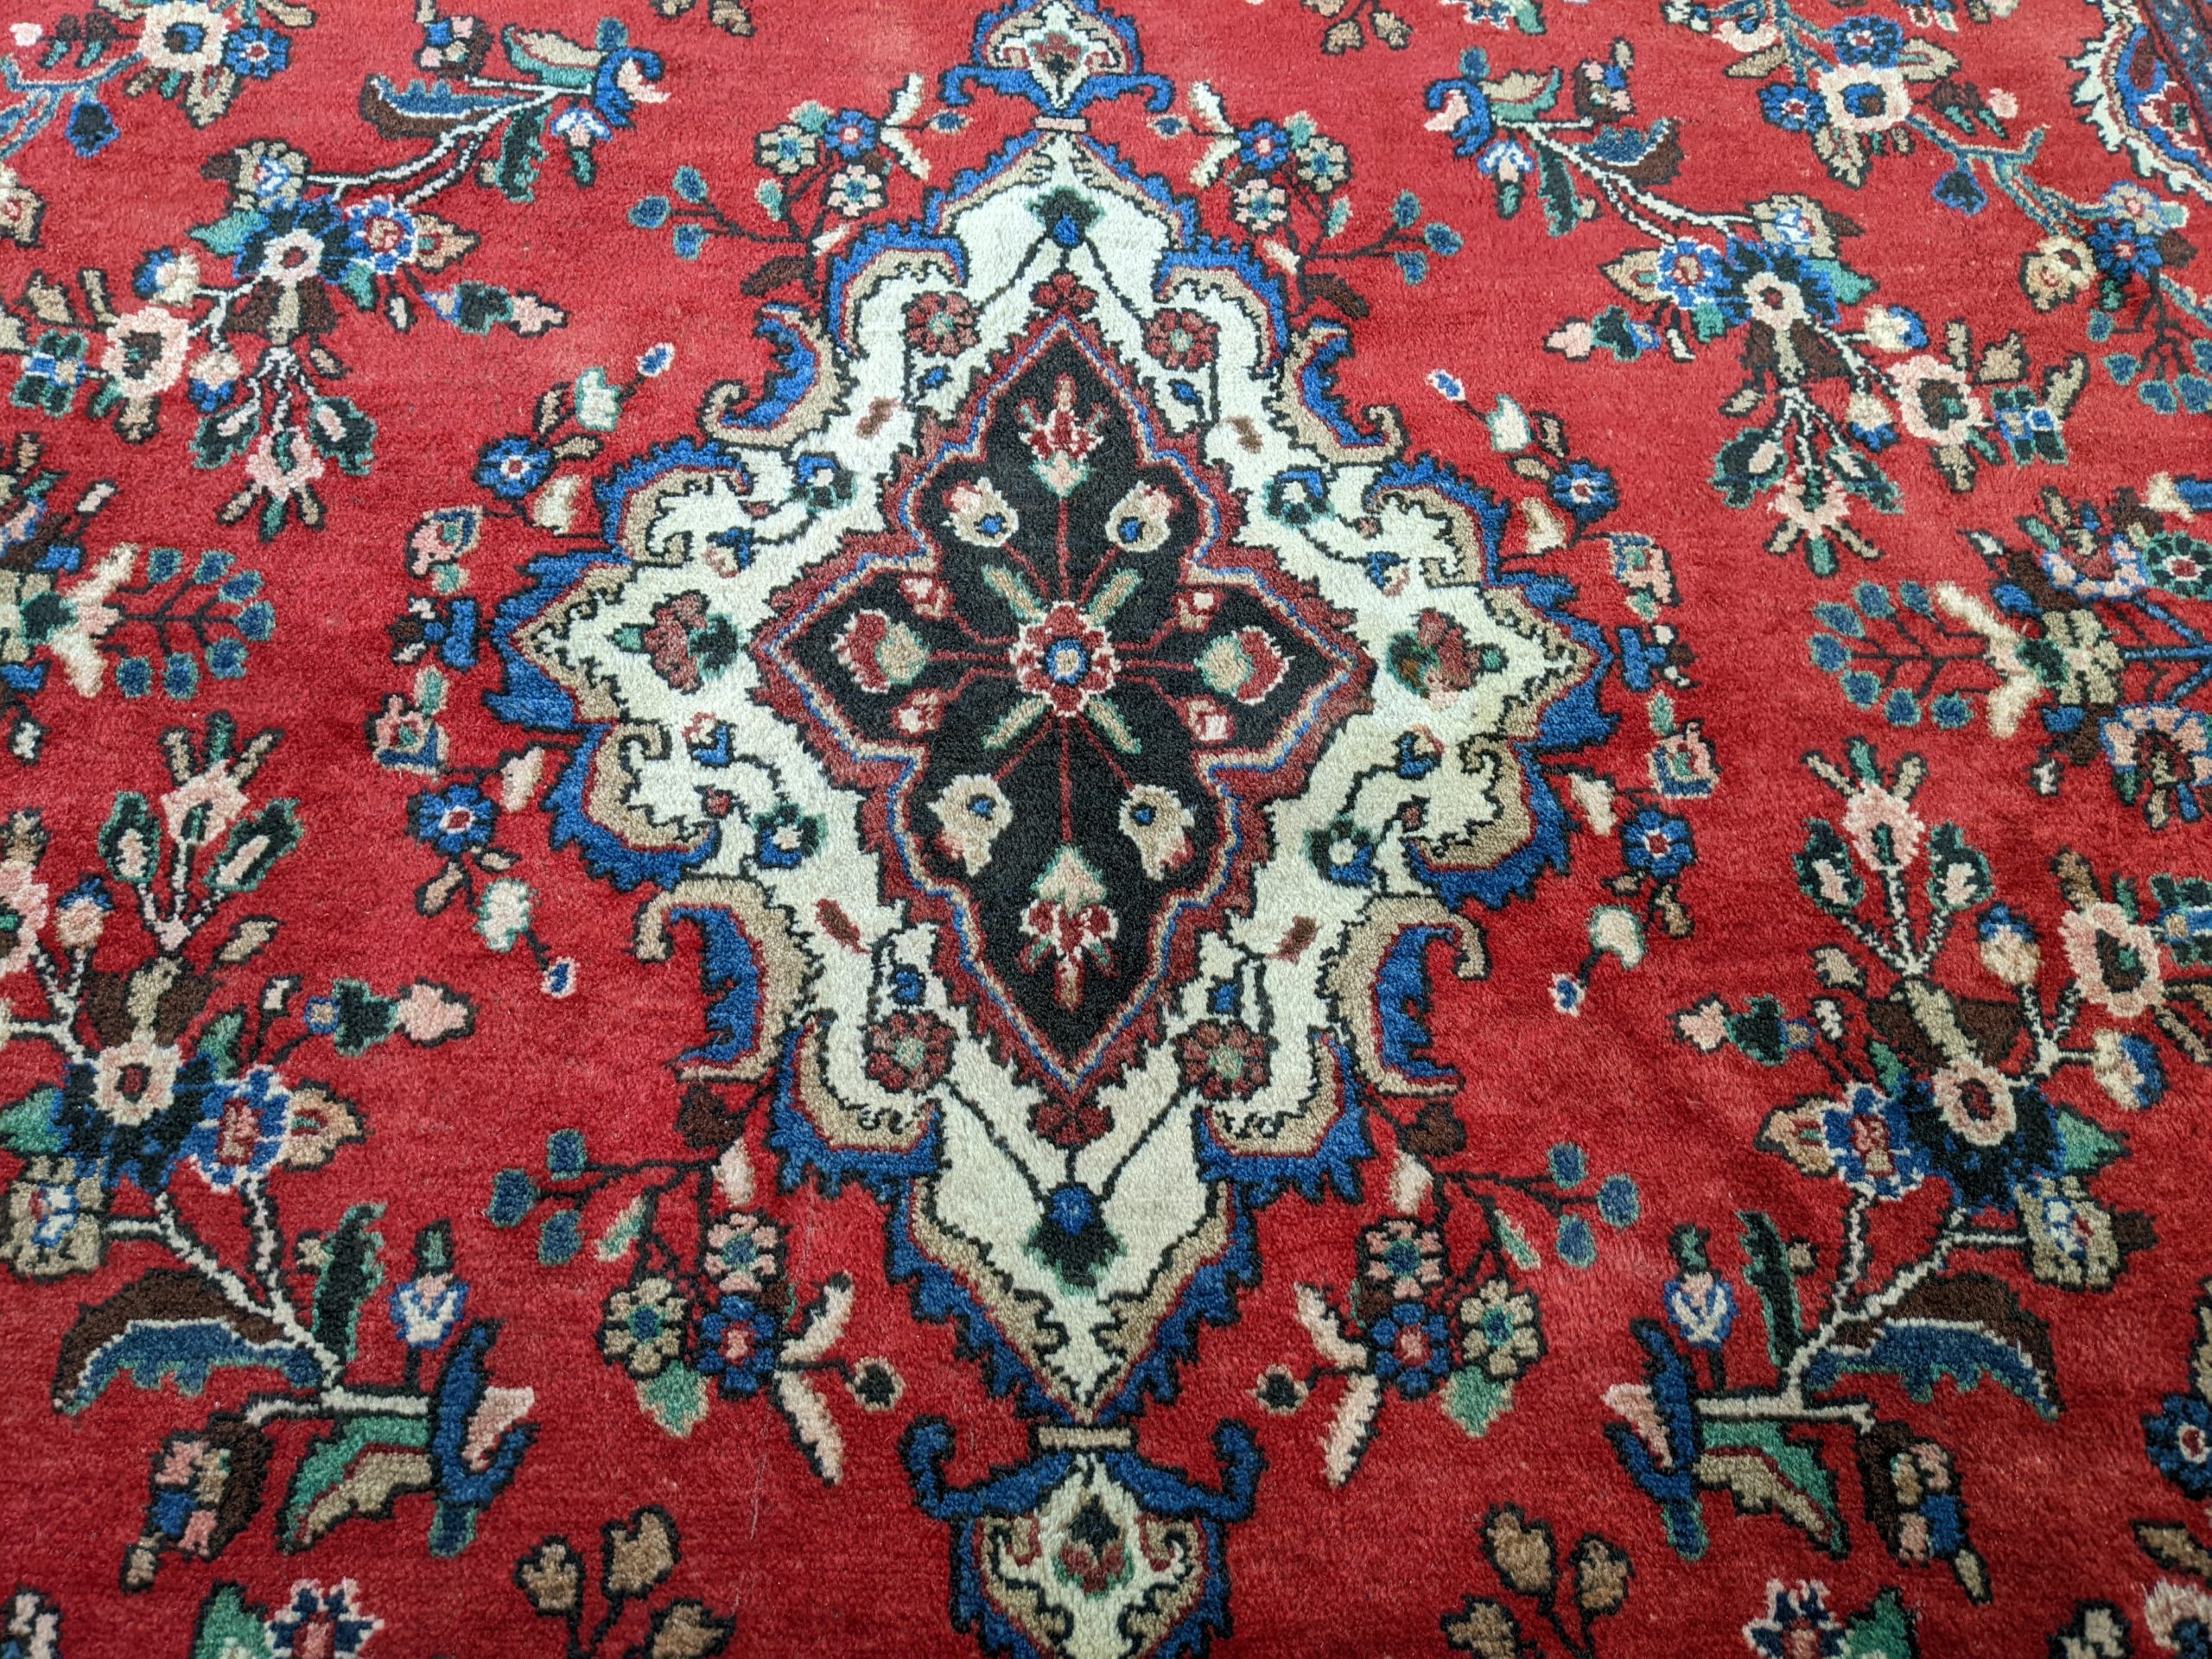 9' x 12'3" Hamadan Persian Rug